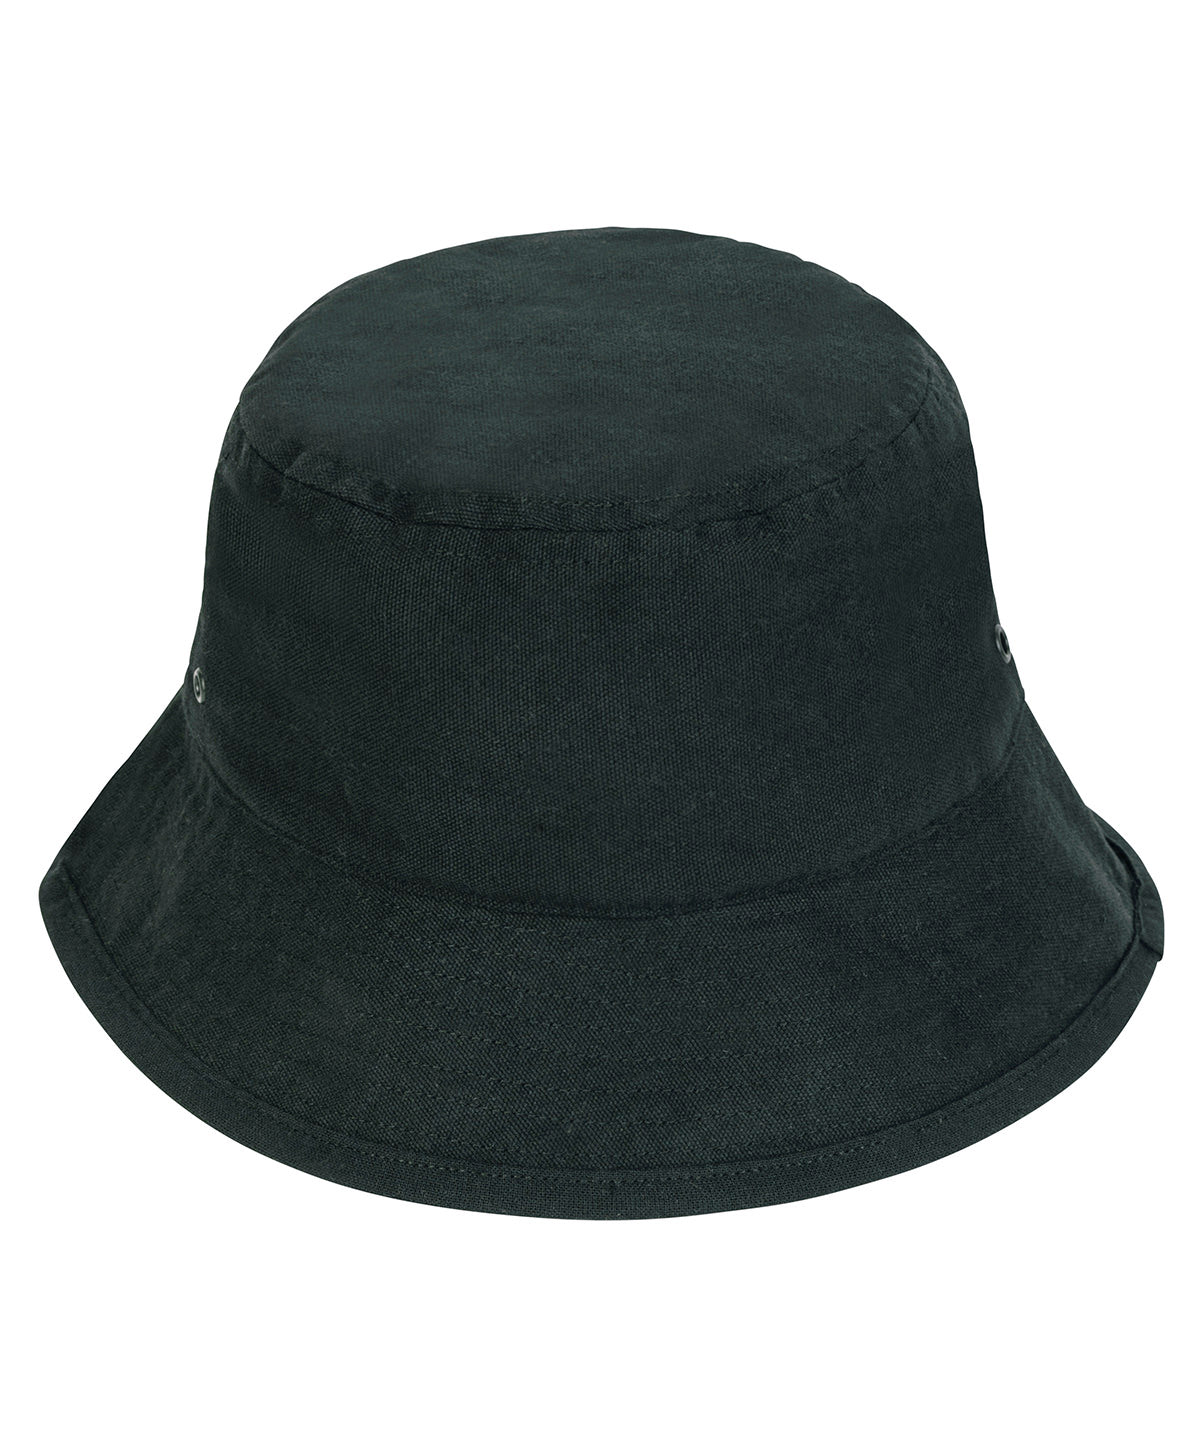 Húfur - Bucket Hat With Metal Eyelets (STAU893)